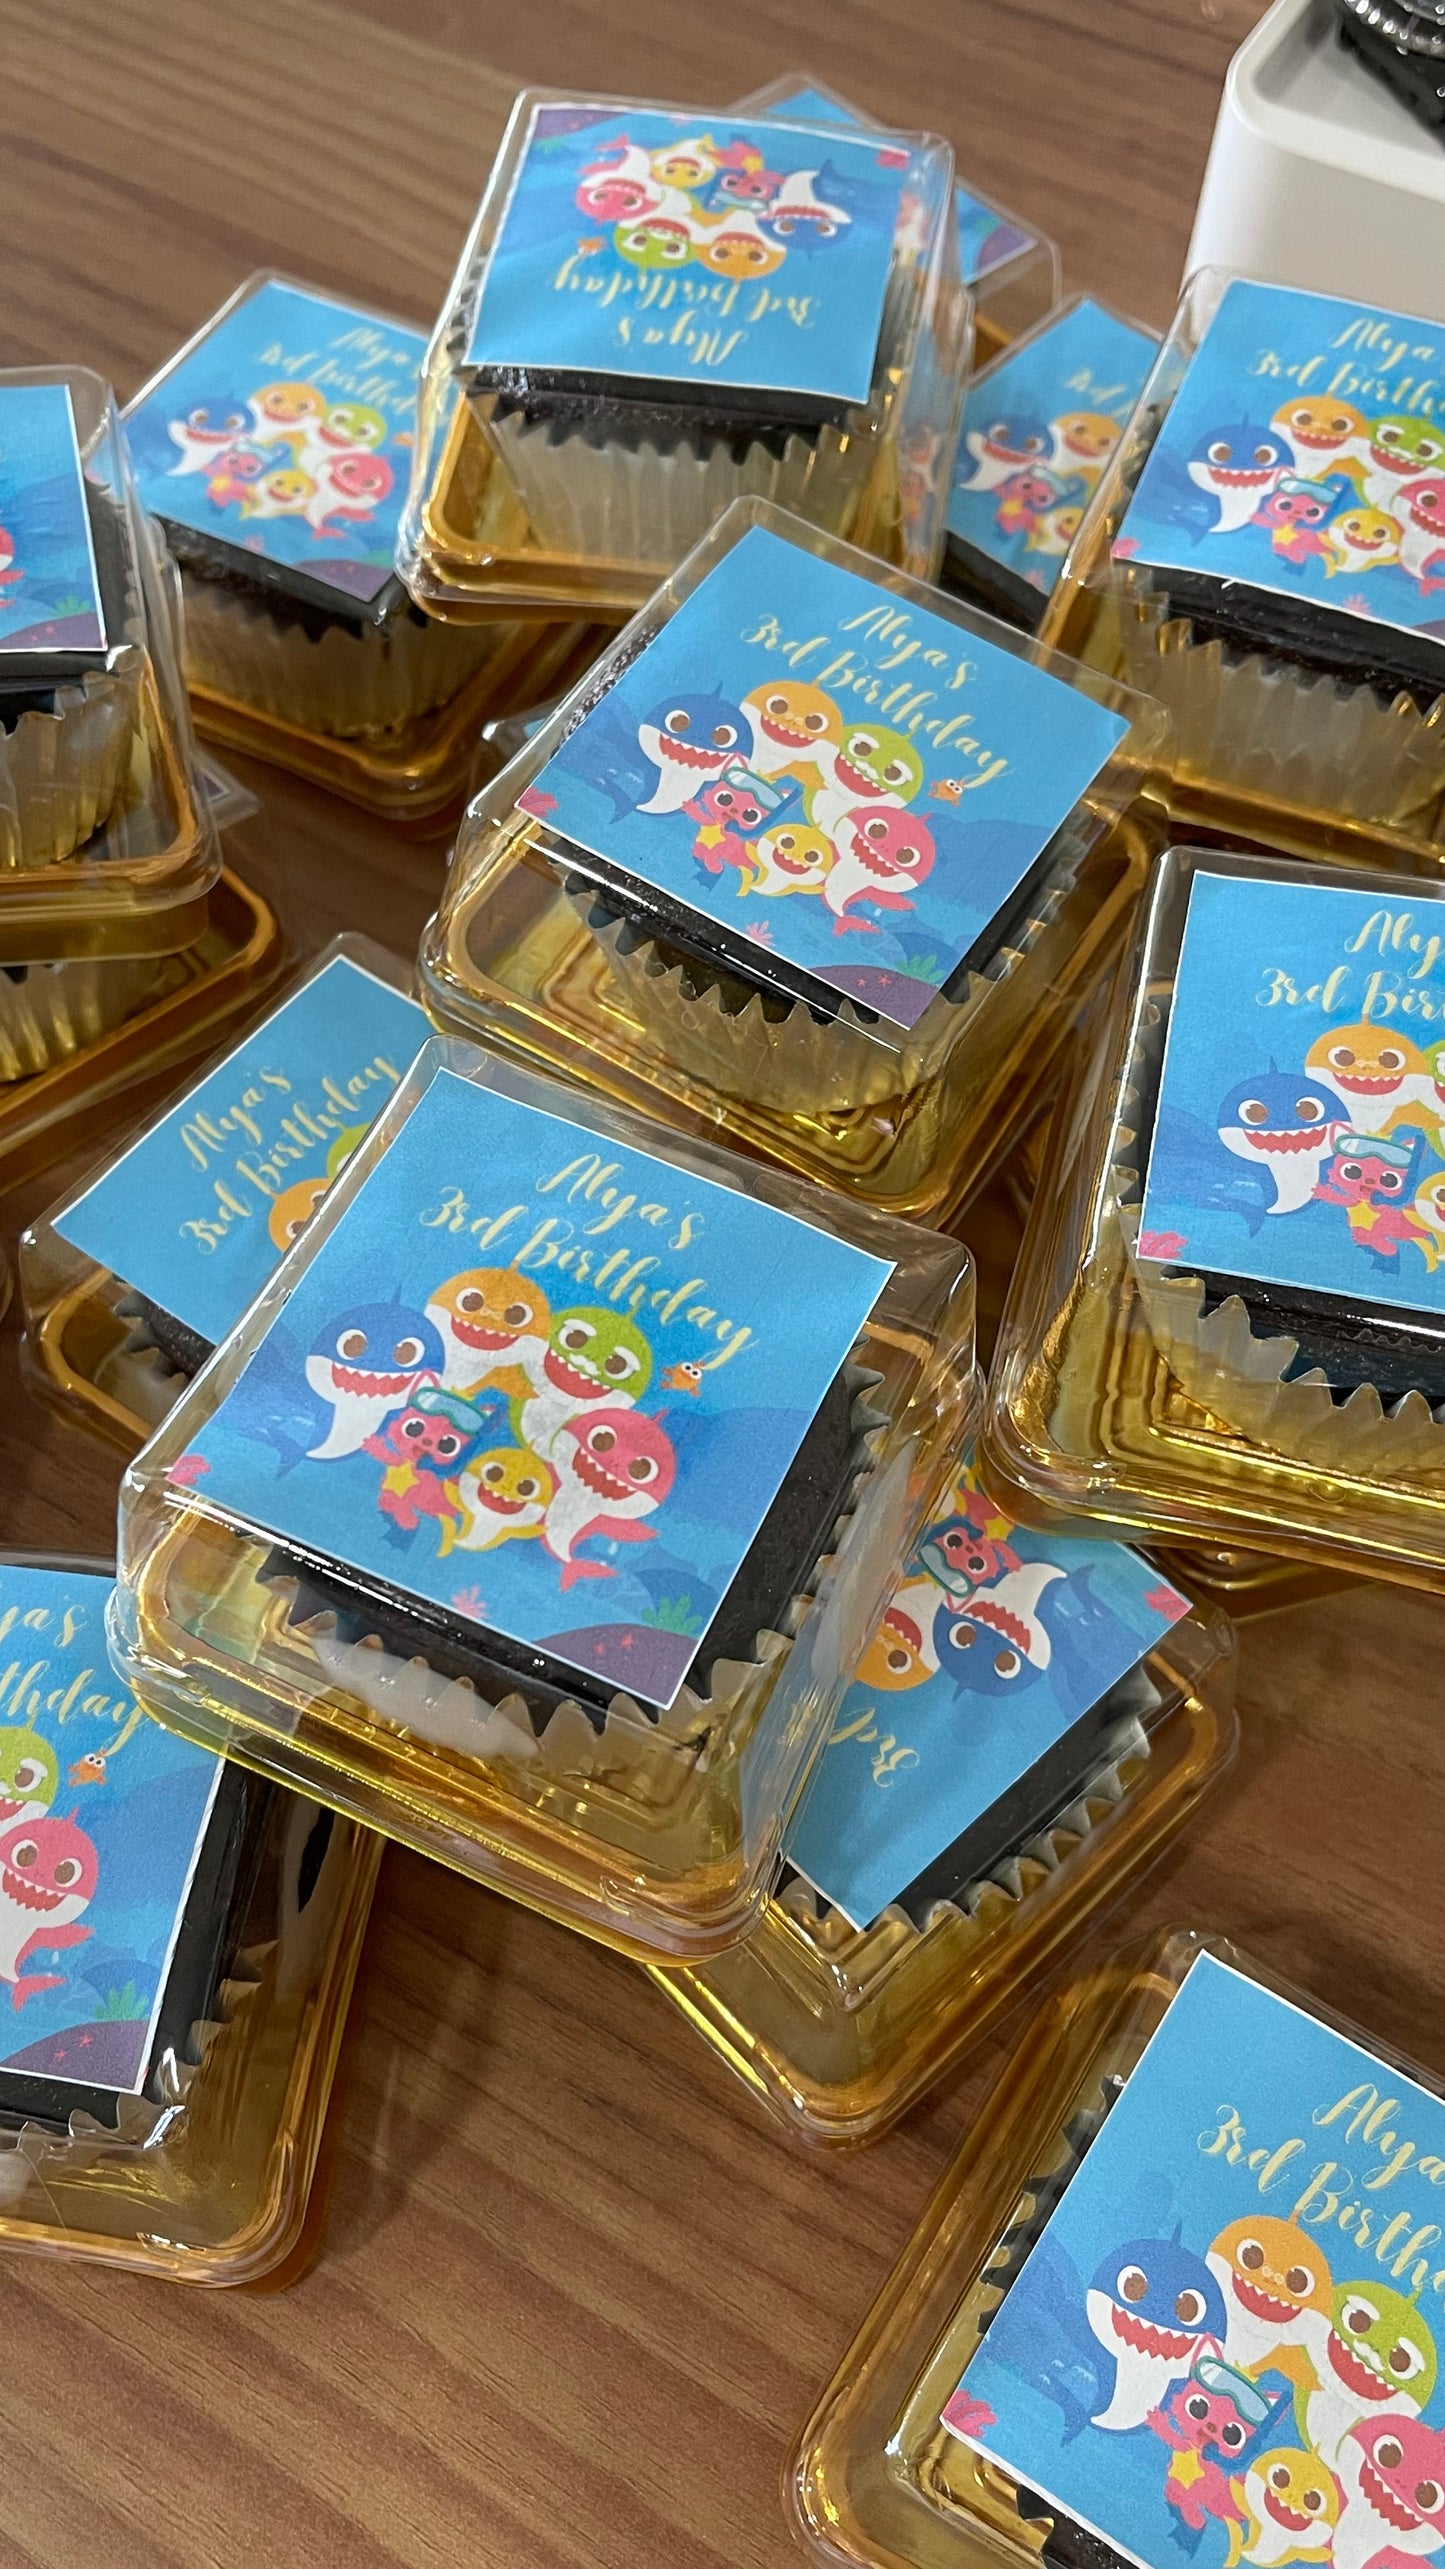 School Celebration cupcakes